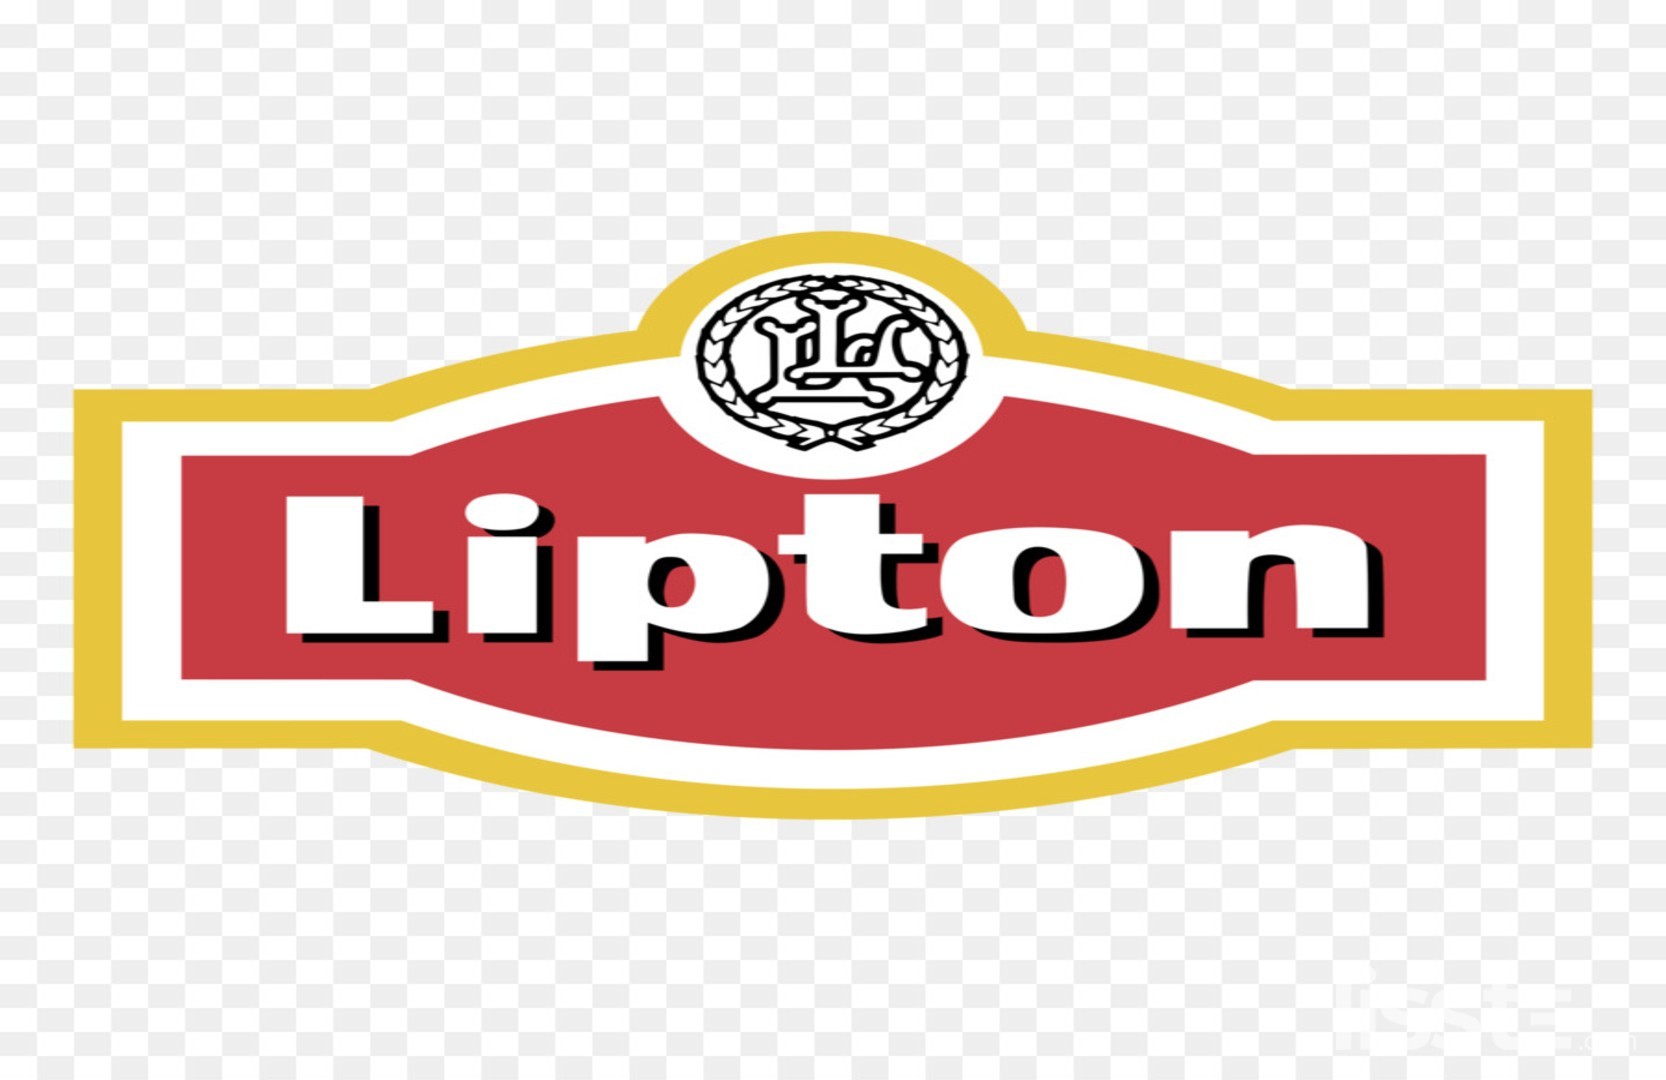 lipton-1588343347.jpg